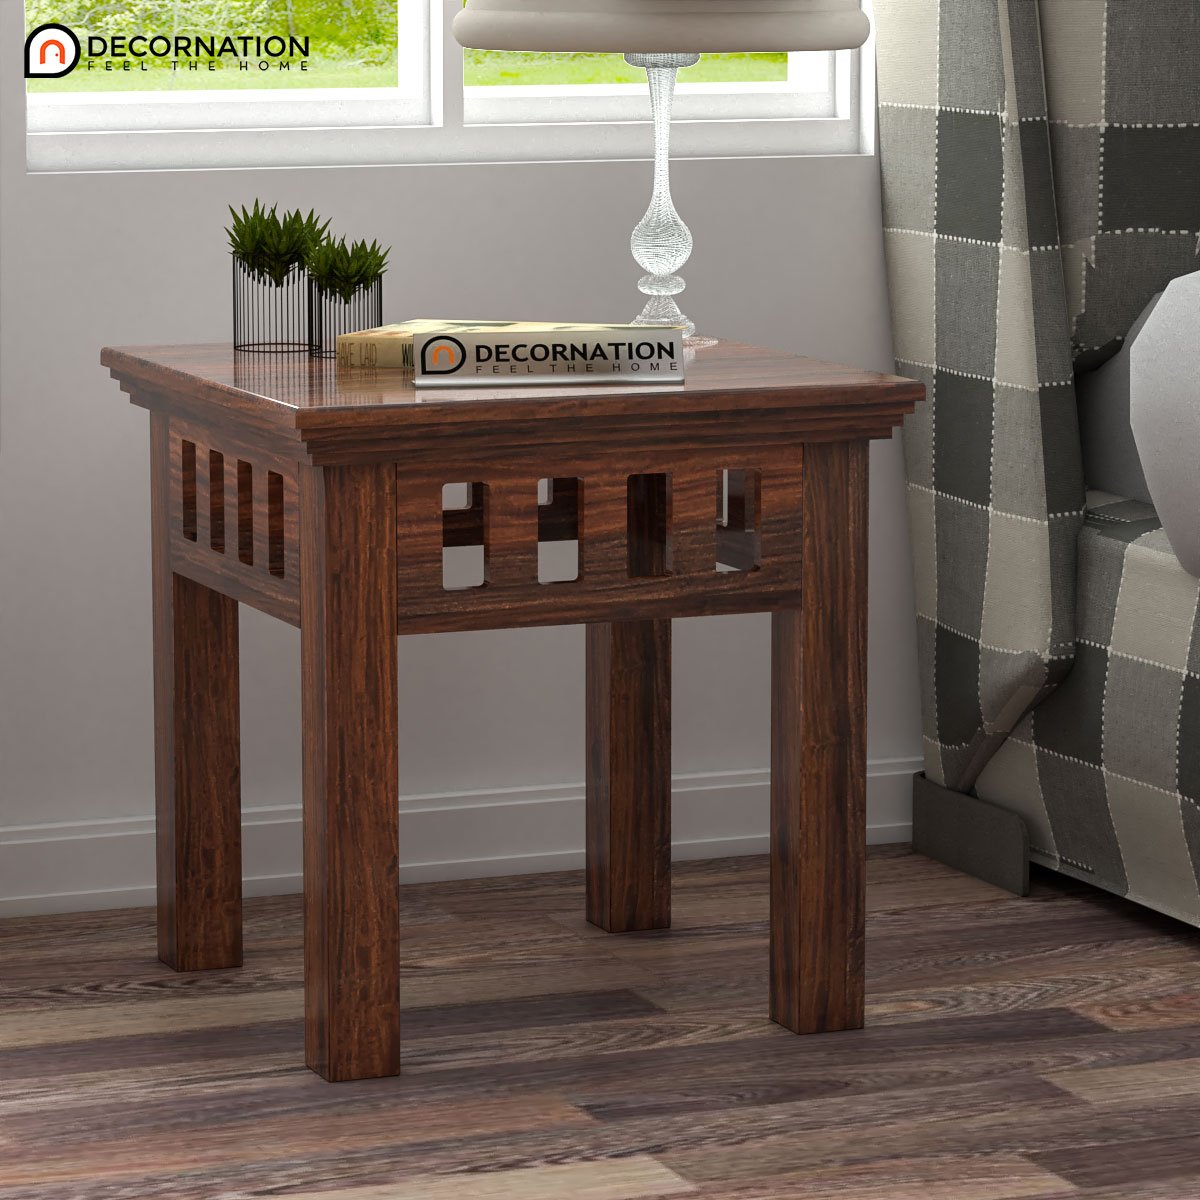 Ural Wooden Bedroom Side Table – Brown